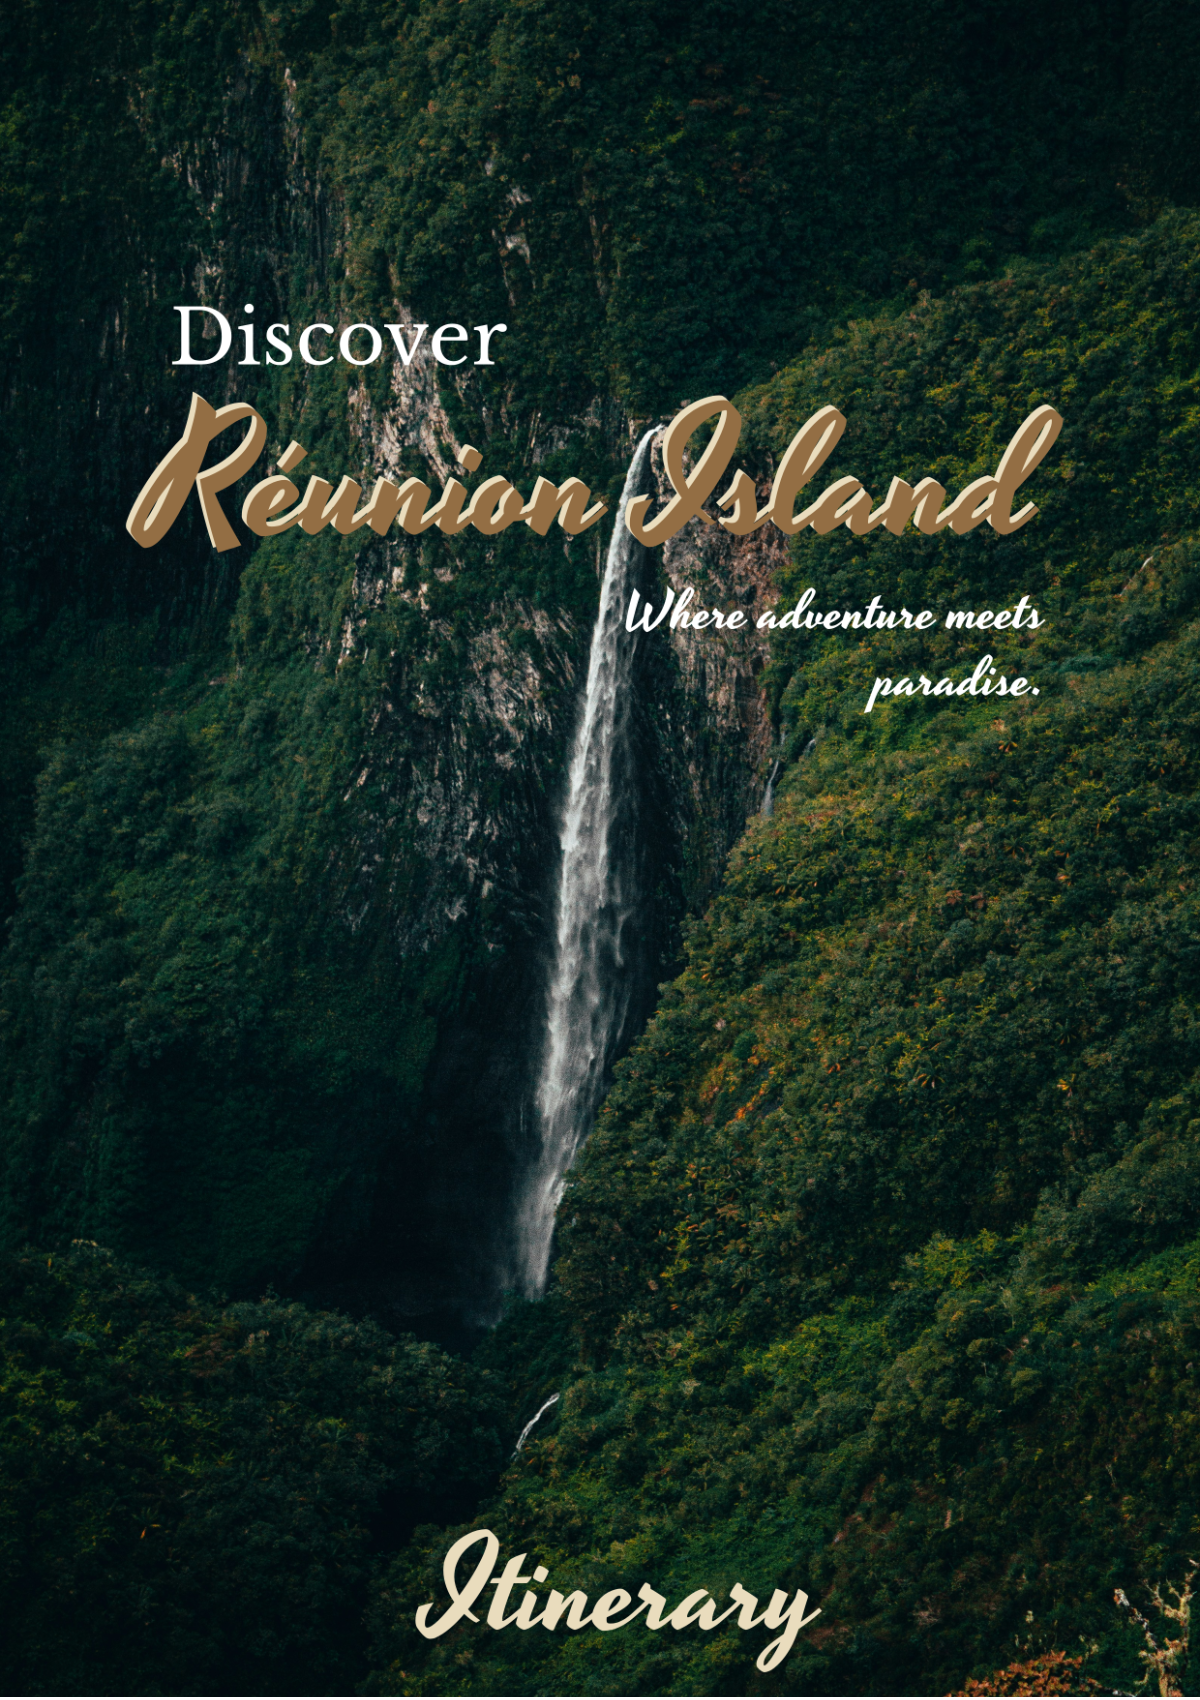 Free Reunion Island Itinerary Template